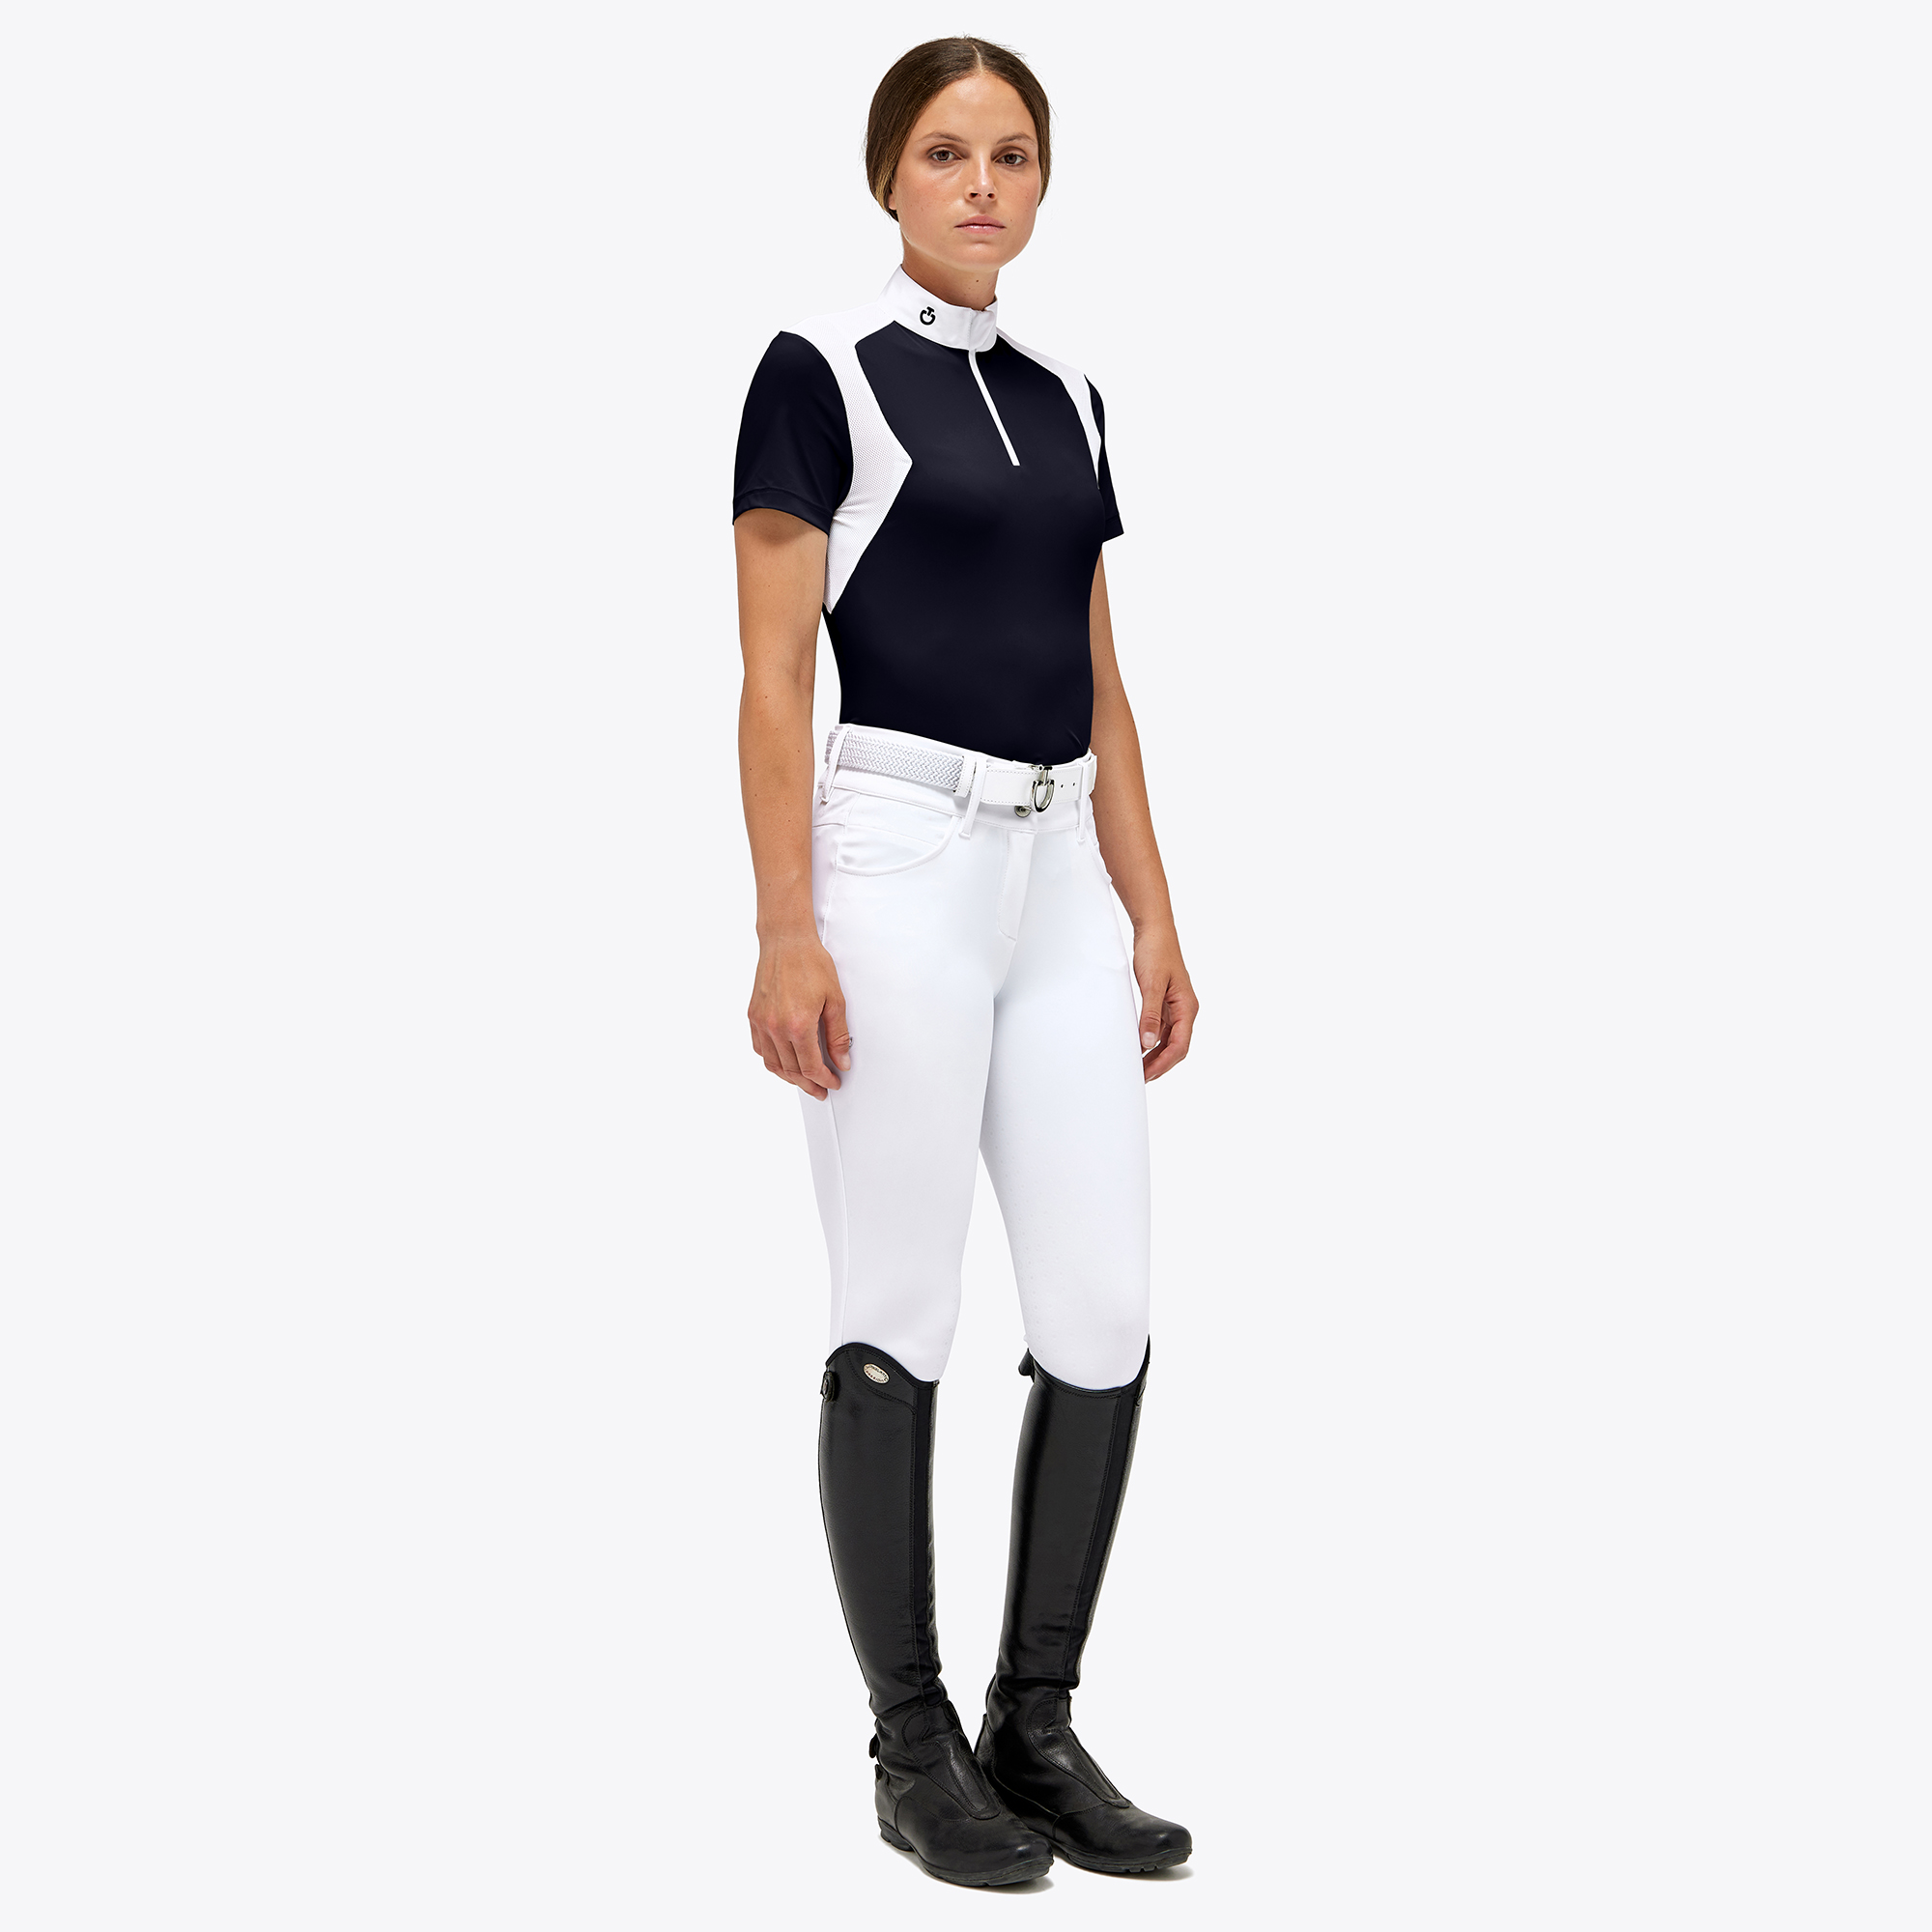 CAVALLERIA TOSCANA elegantes Damen Kurzarm Turniershirt Jersey Mesh - white/knit - M - 4